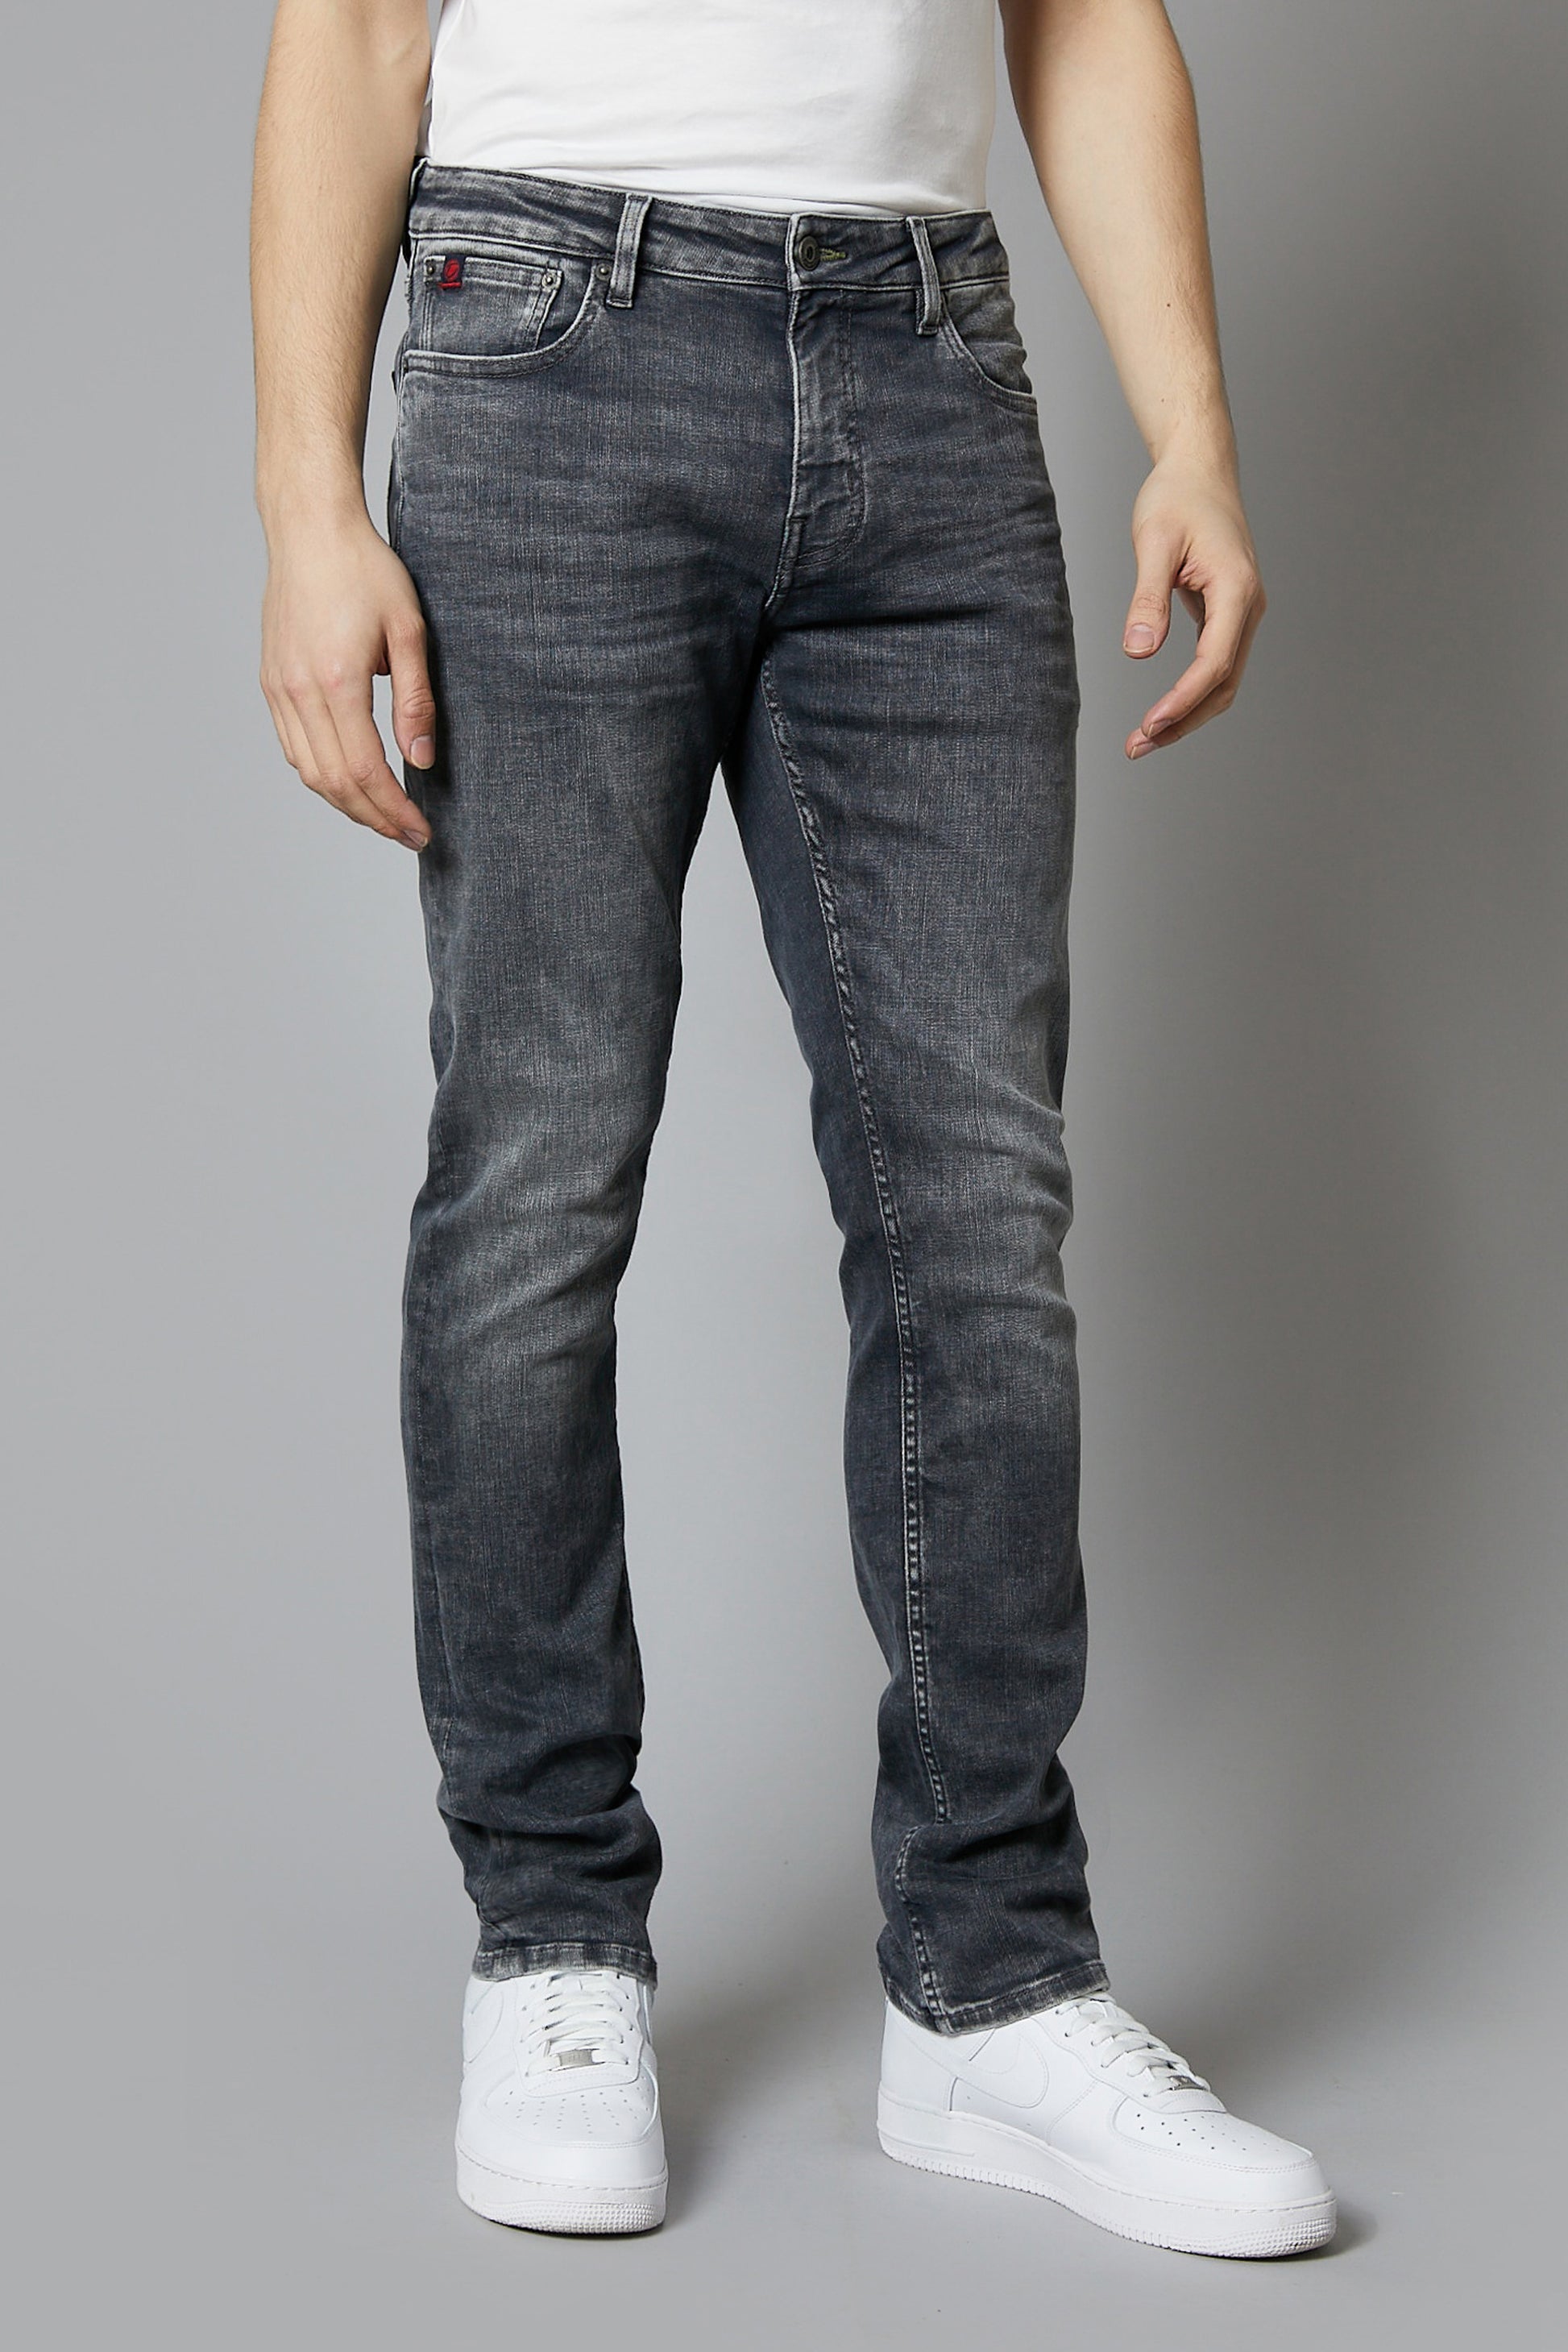 ALASKA Straight Fit Jeans In Grey